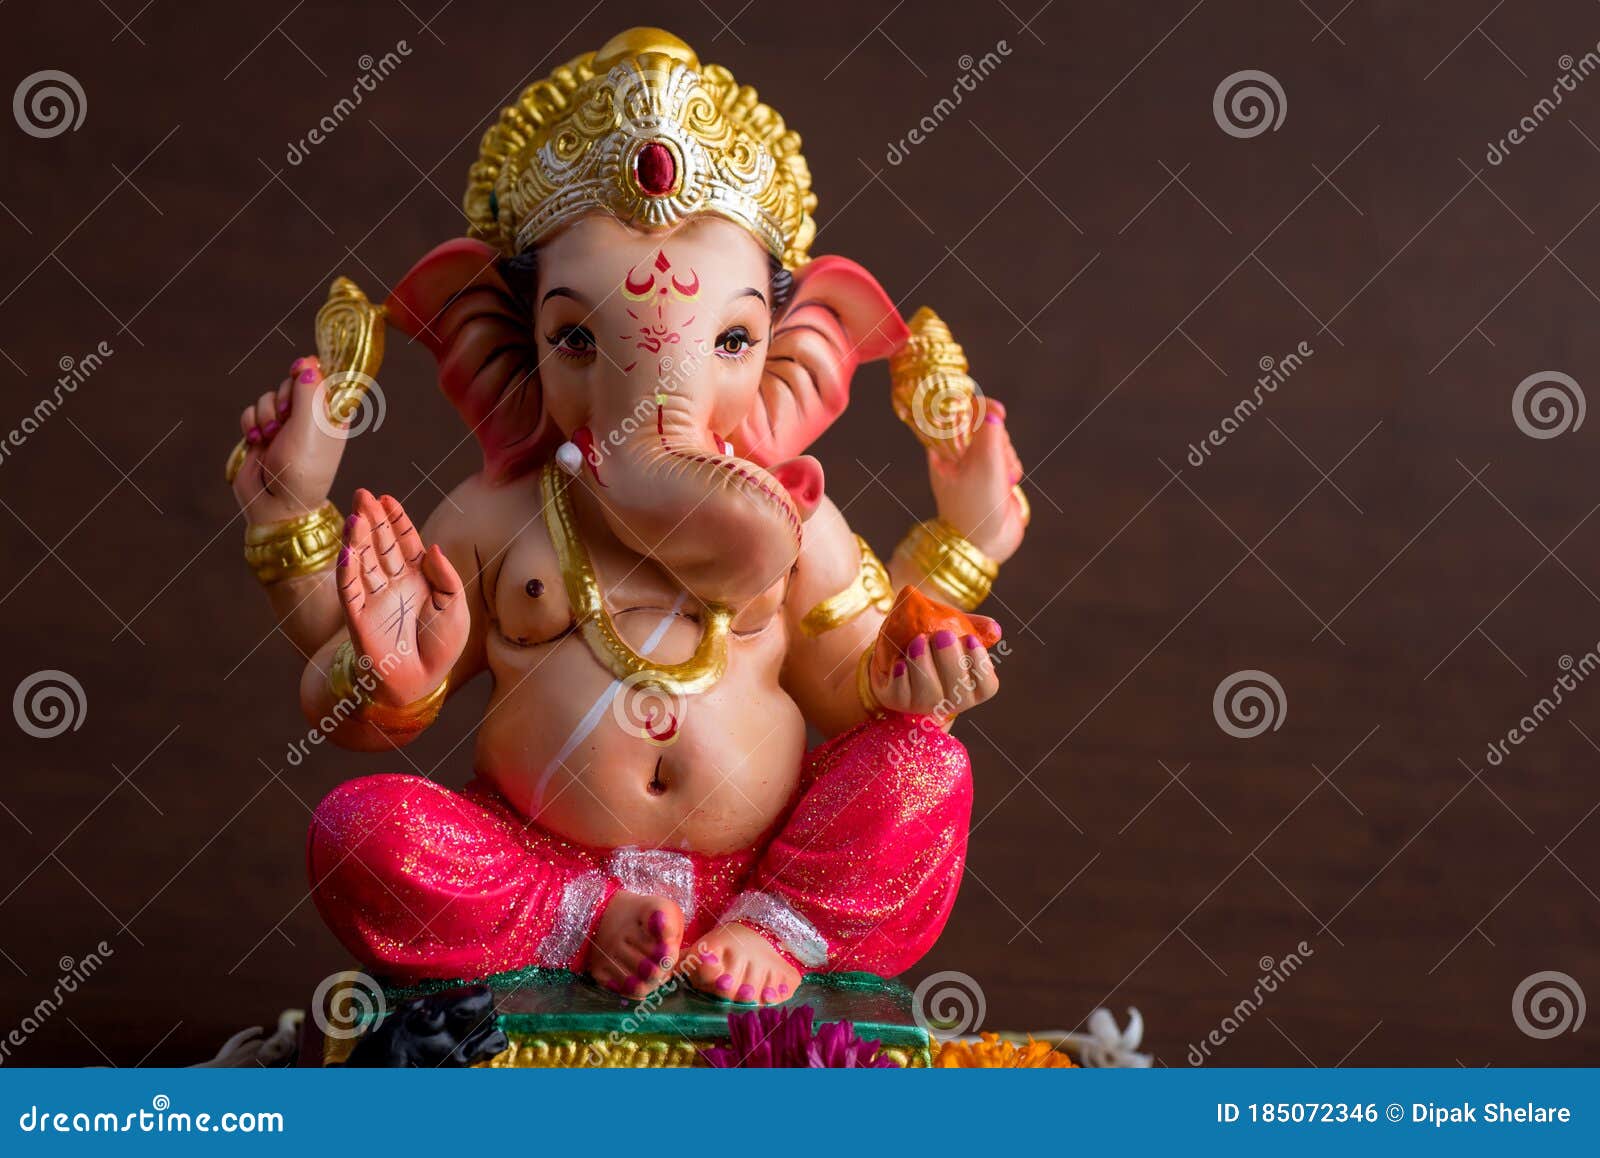 Hindu God Ganesha. Ganesha Idol On Dark Wooden Background Stock Photo  185072346 - Megapixl